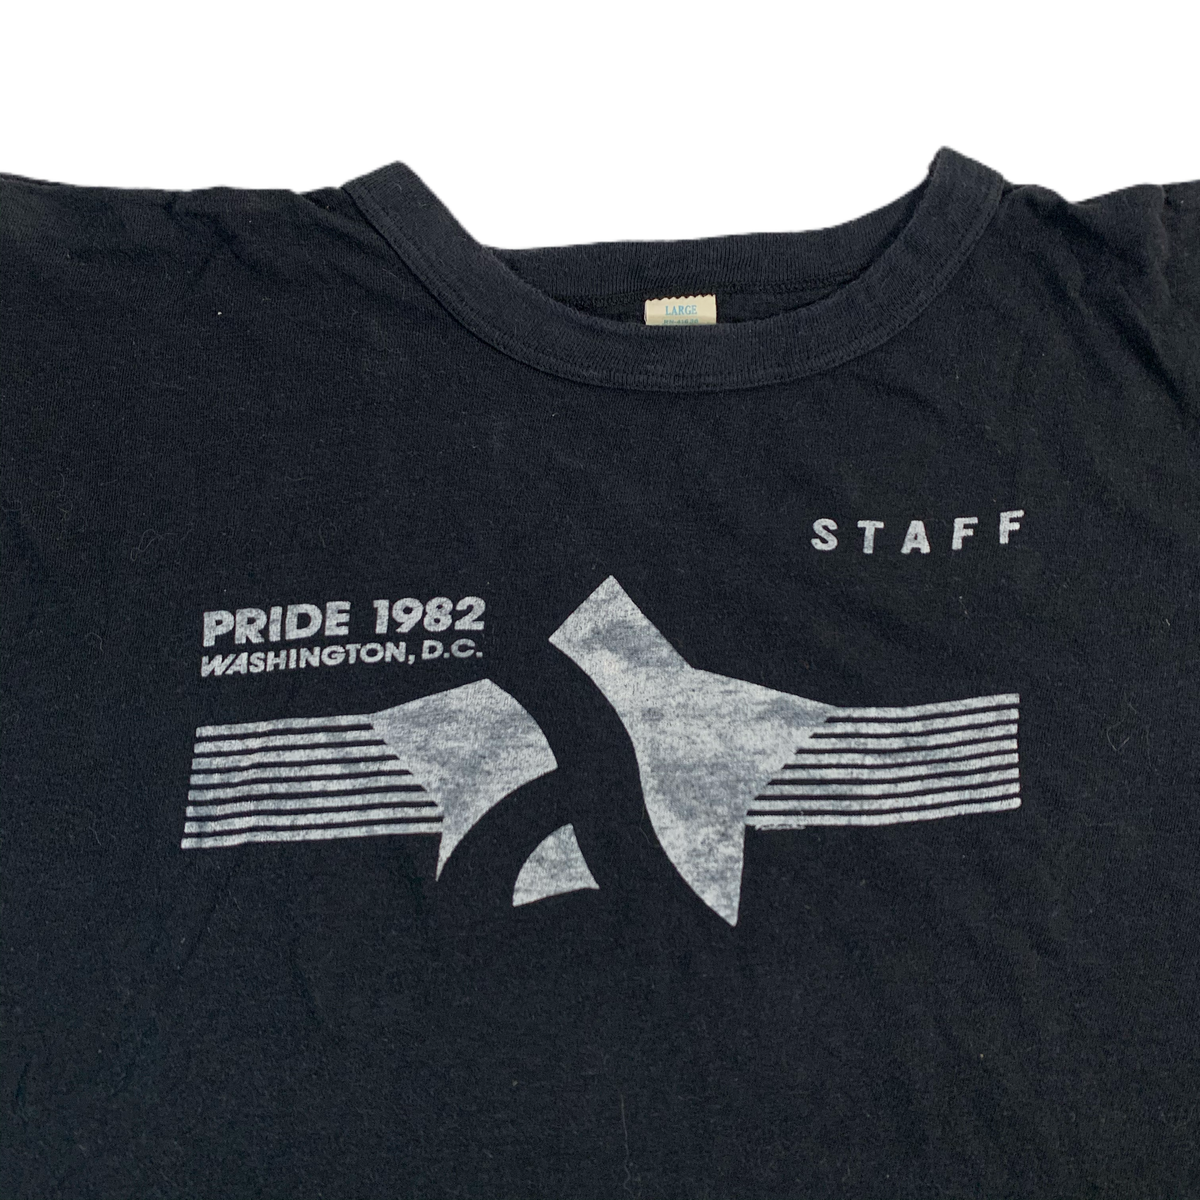 Vintage Washington, D.C. “Pride ‘82” Staff T-Shirt - jointcustodydc